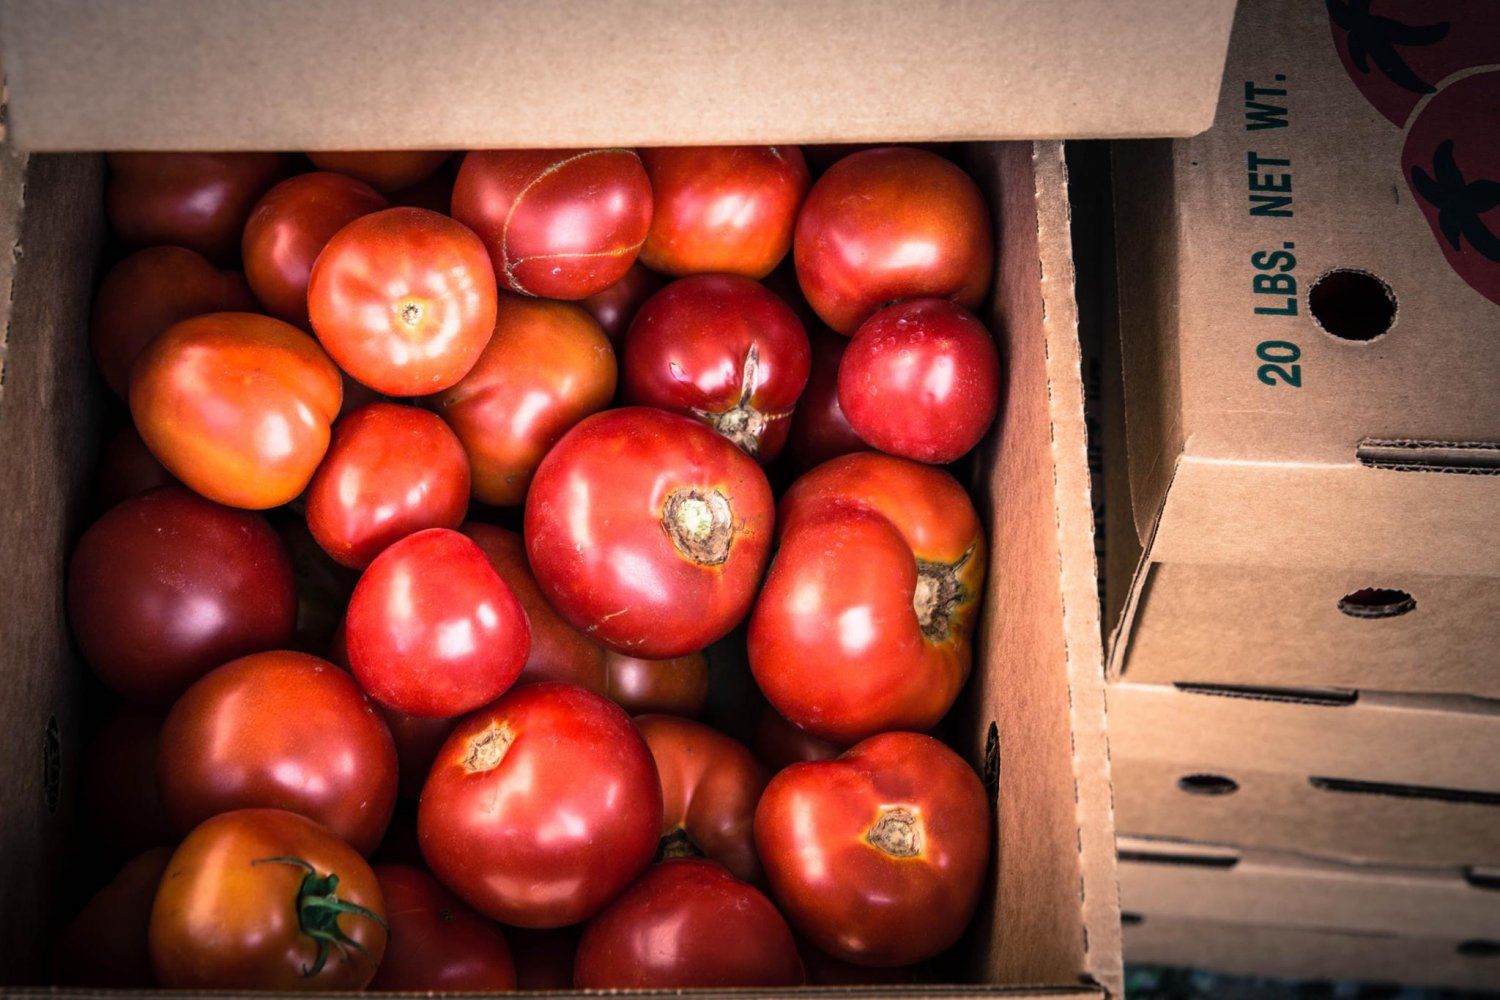 Next Happening: Bulk Tomato Sale Saturday morning Aug 14, 2021 at Suffield Farm